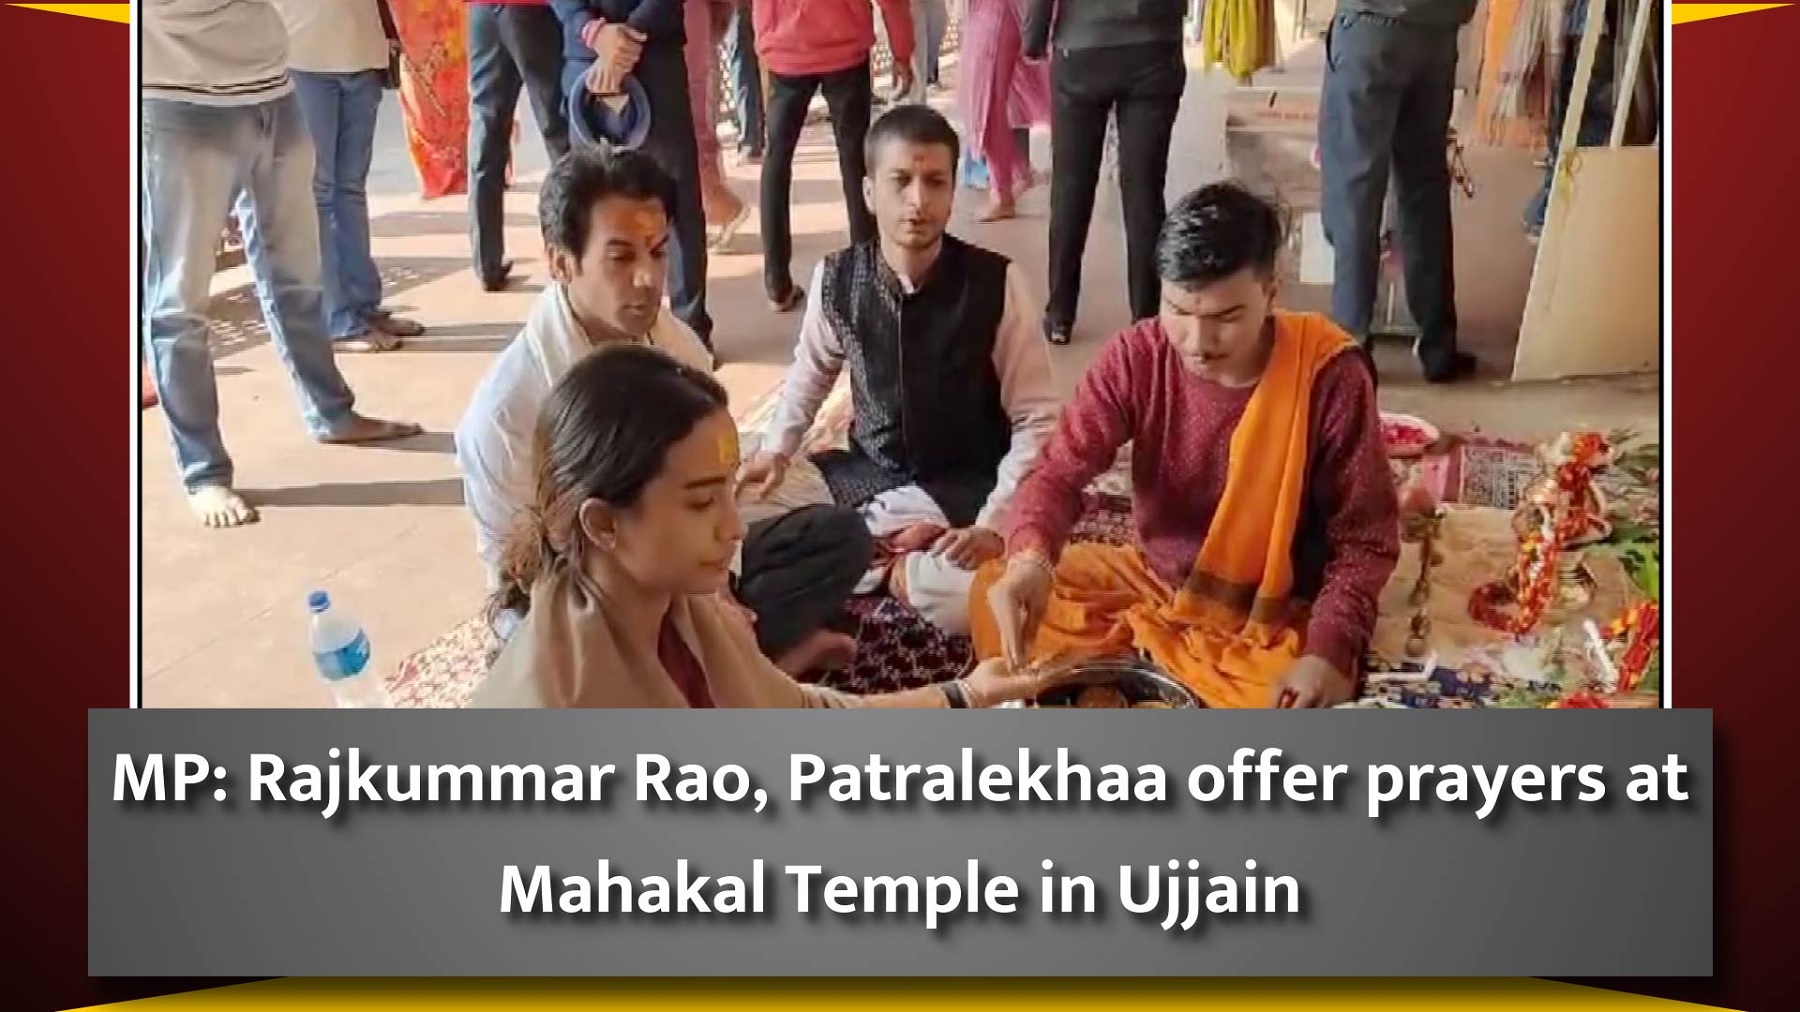 MP: Rajkummar Rao, Patralekhaa offer prayers at Mahakal Temple in Ujjain